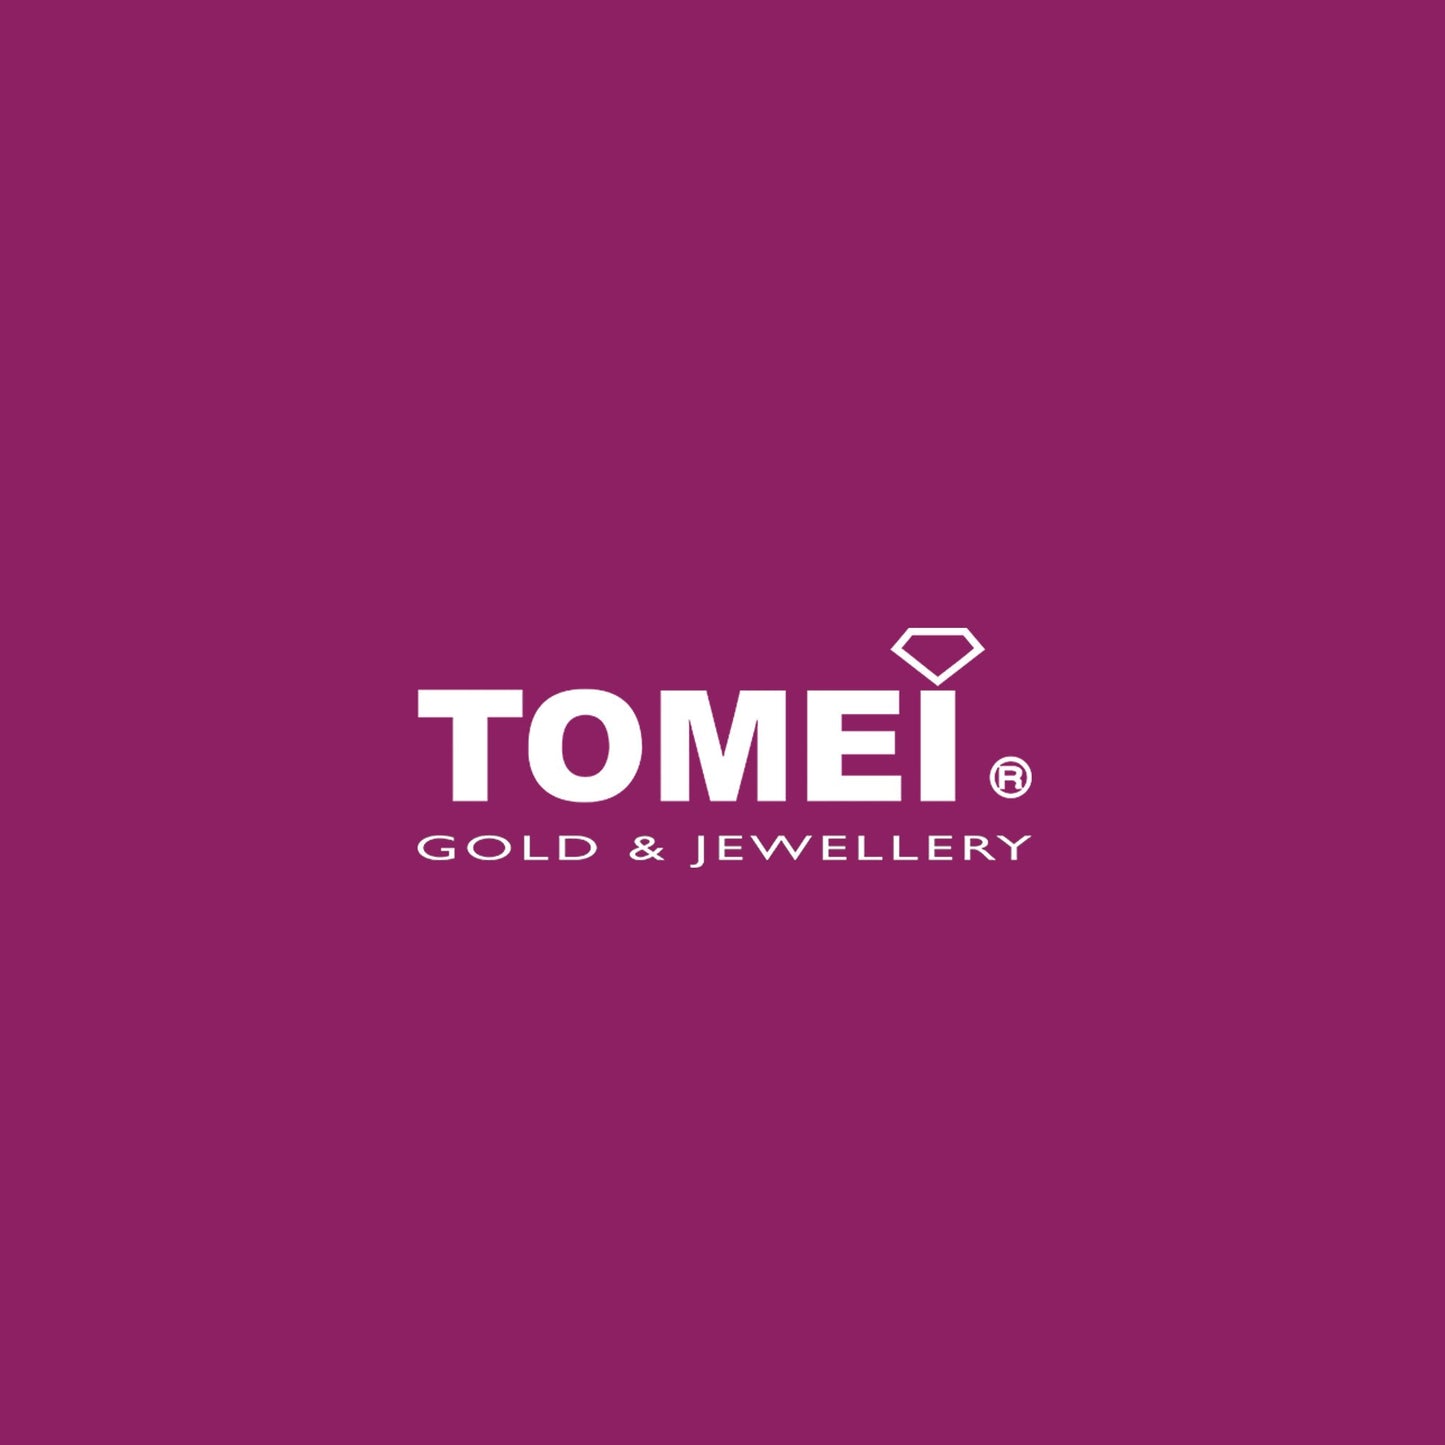 TOMEI Pendant, Yellow Gold 916